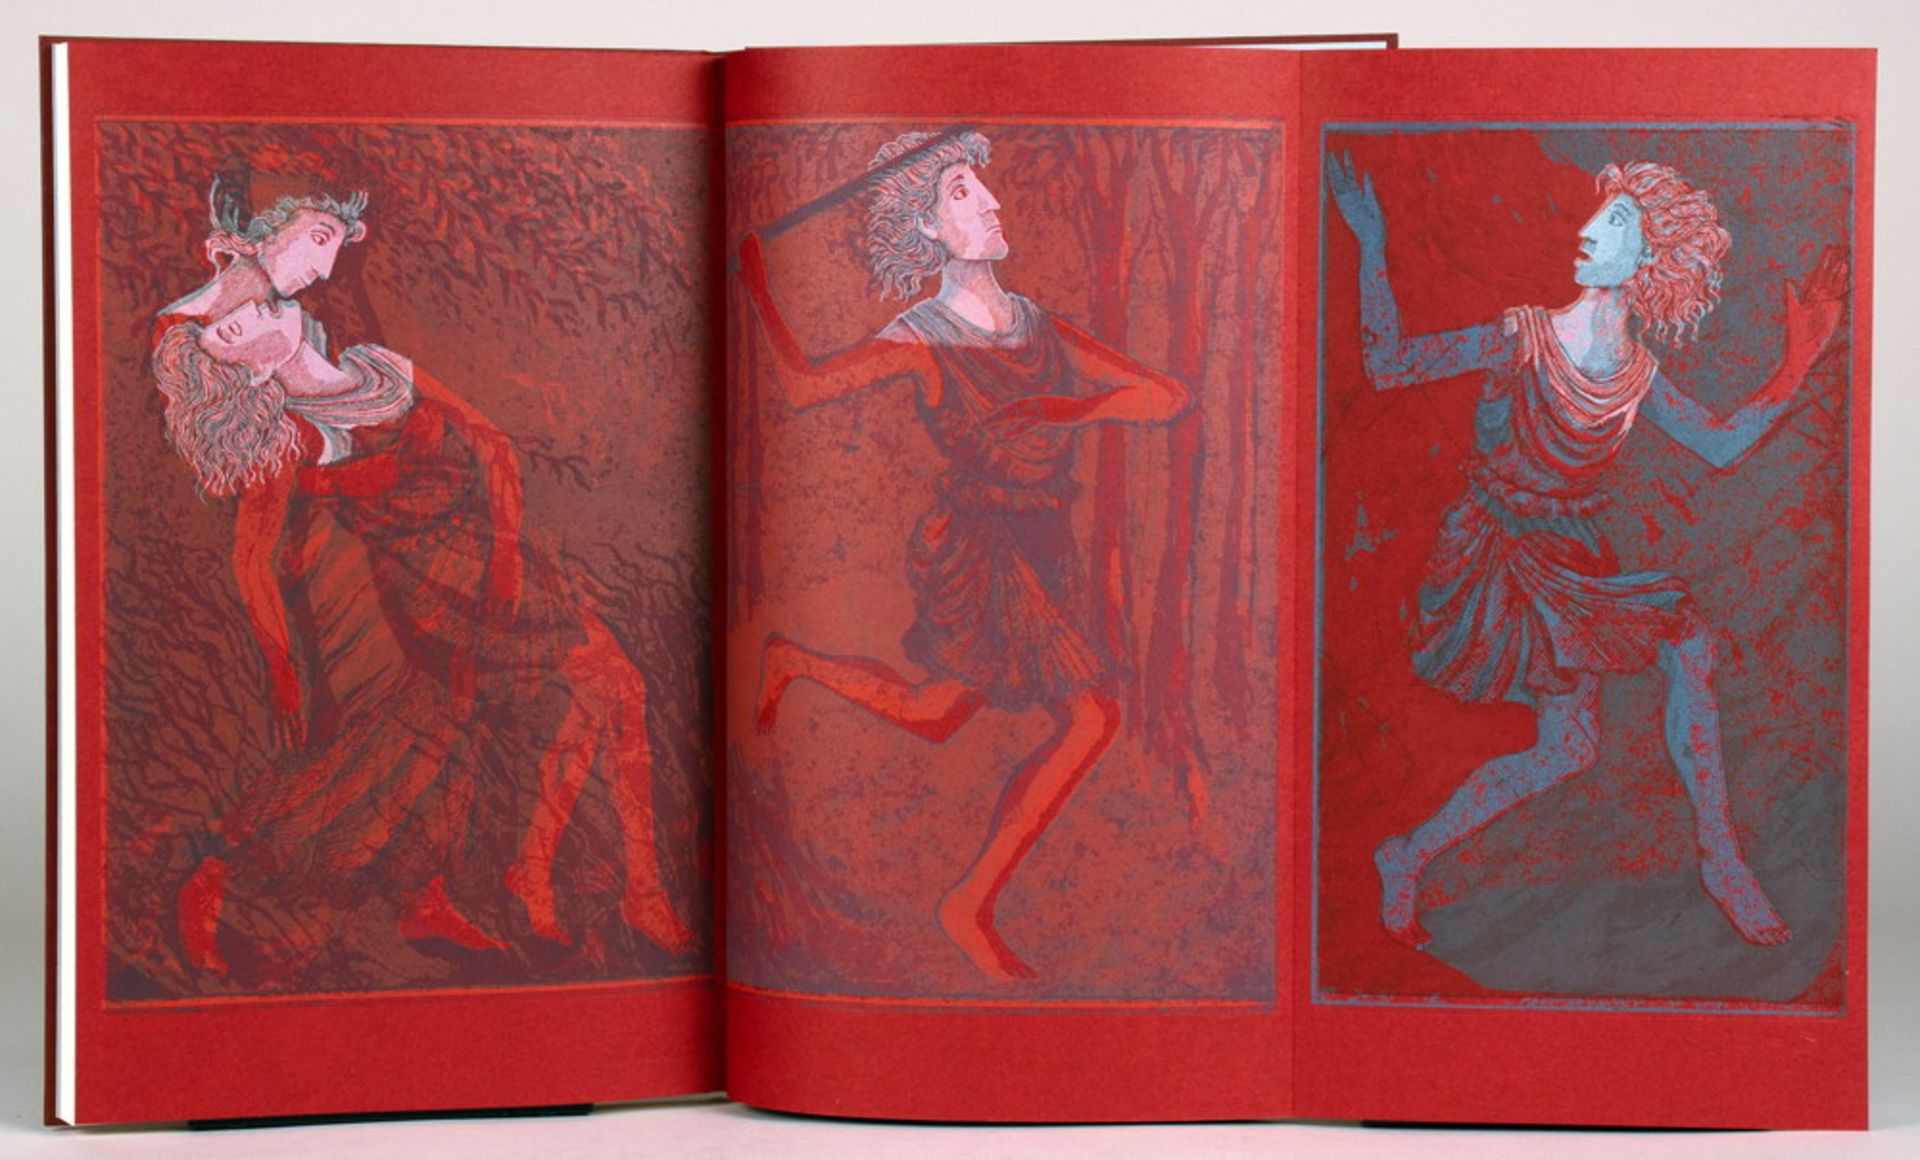 Raamin-Presse - William Shakespeare. Venus und/and Adonis. - Image 3 of 3